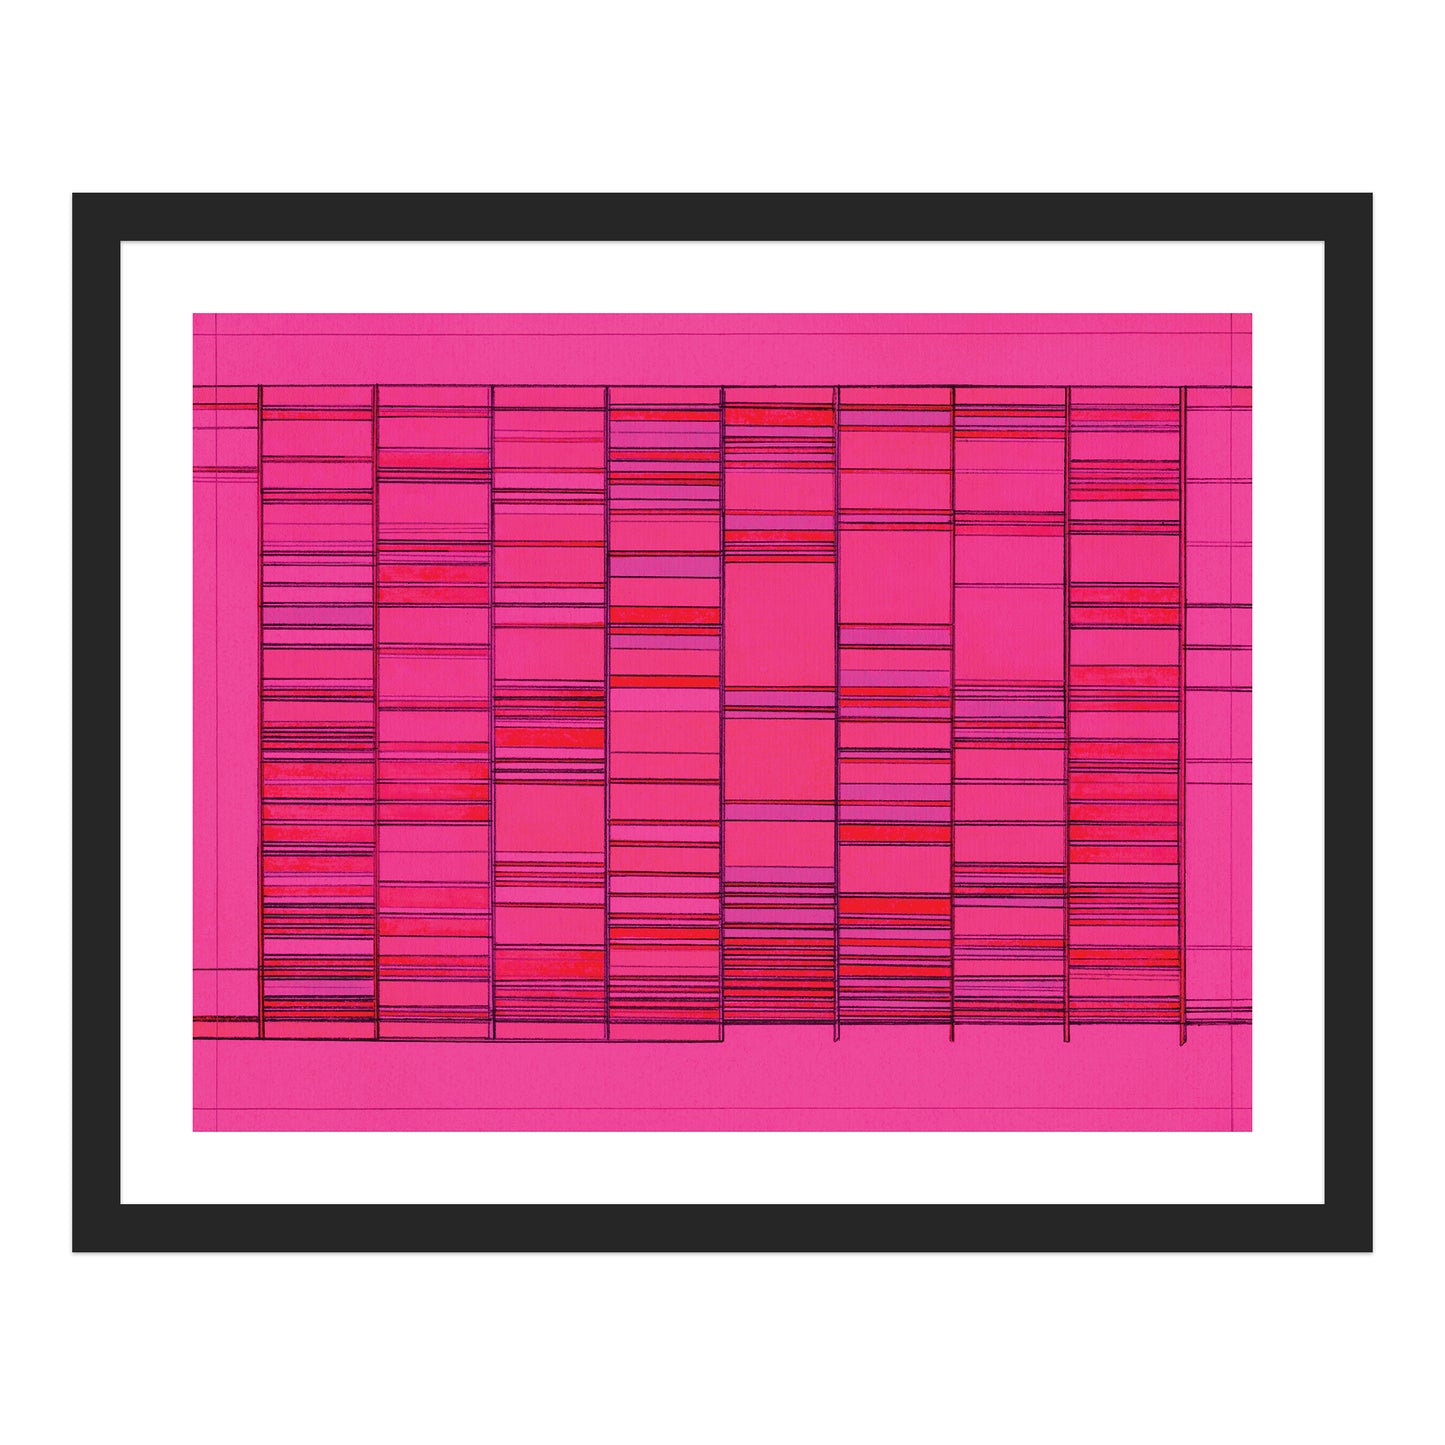 Generator (pink grids) 4